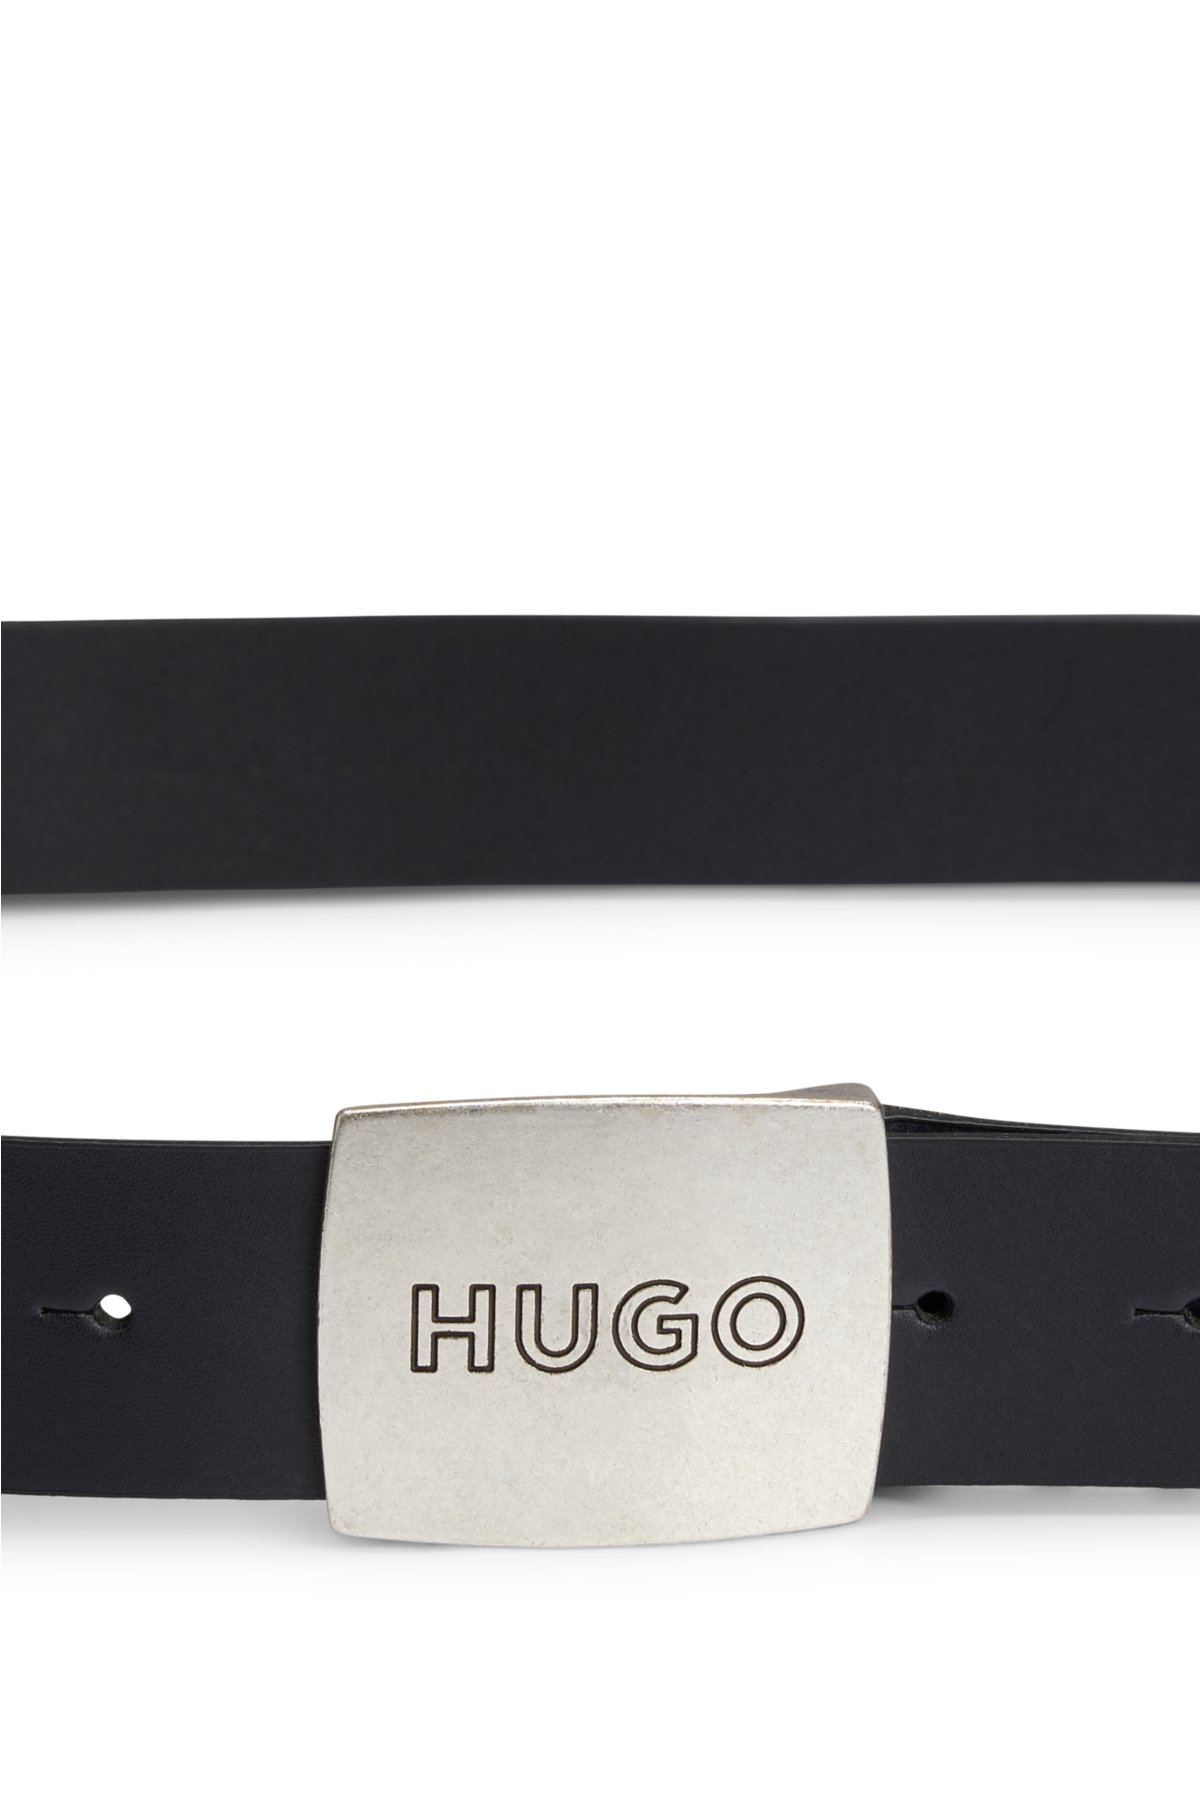 HUGO - Koppelschließe Ledergürtel mit auf der Logo